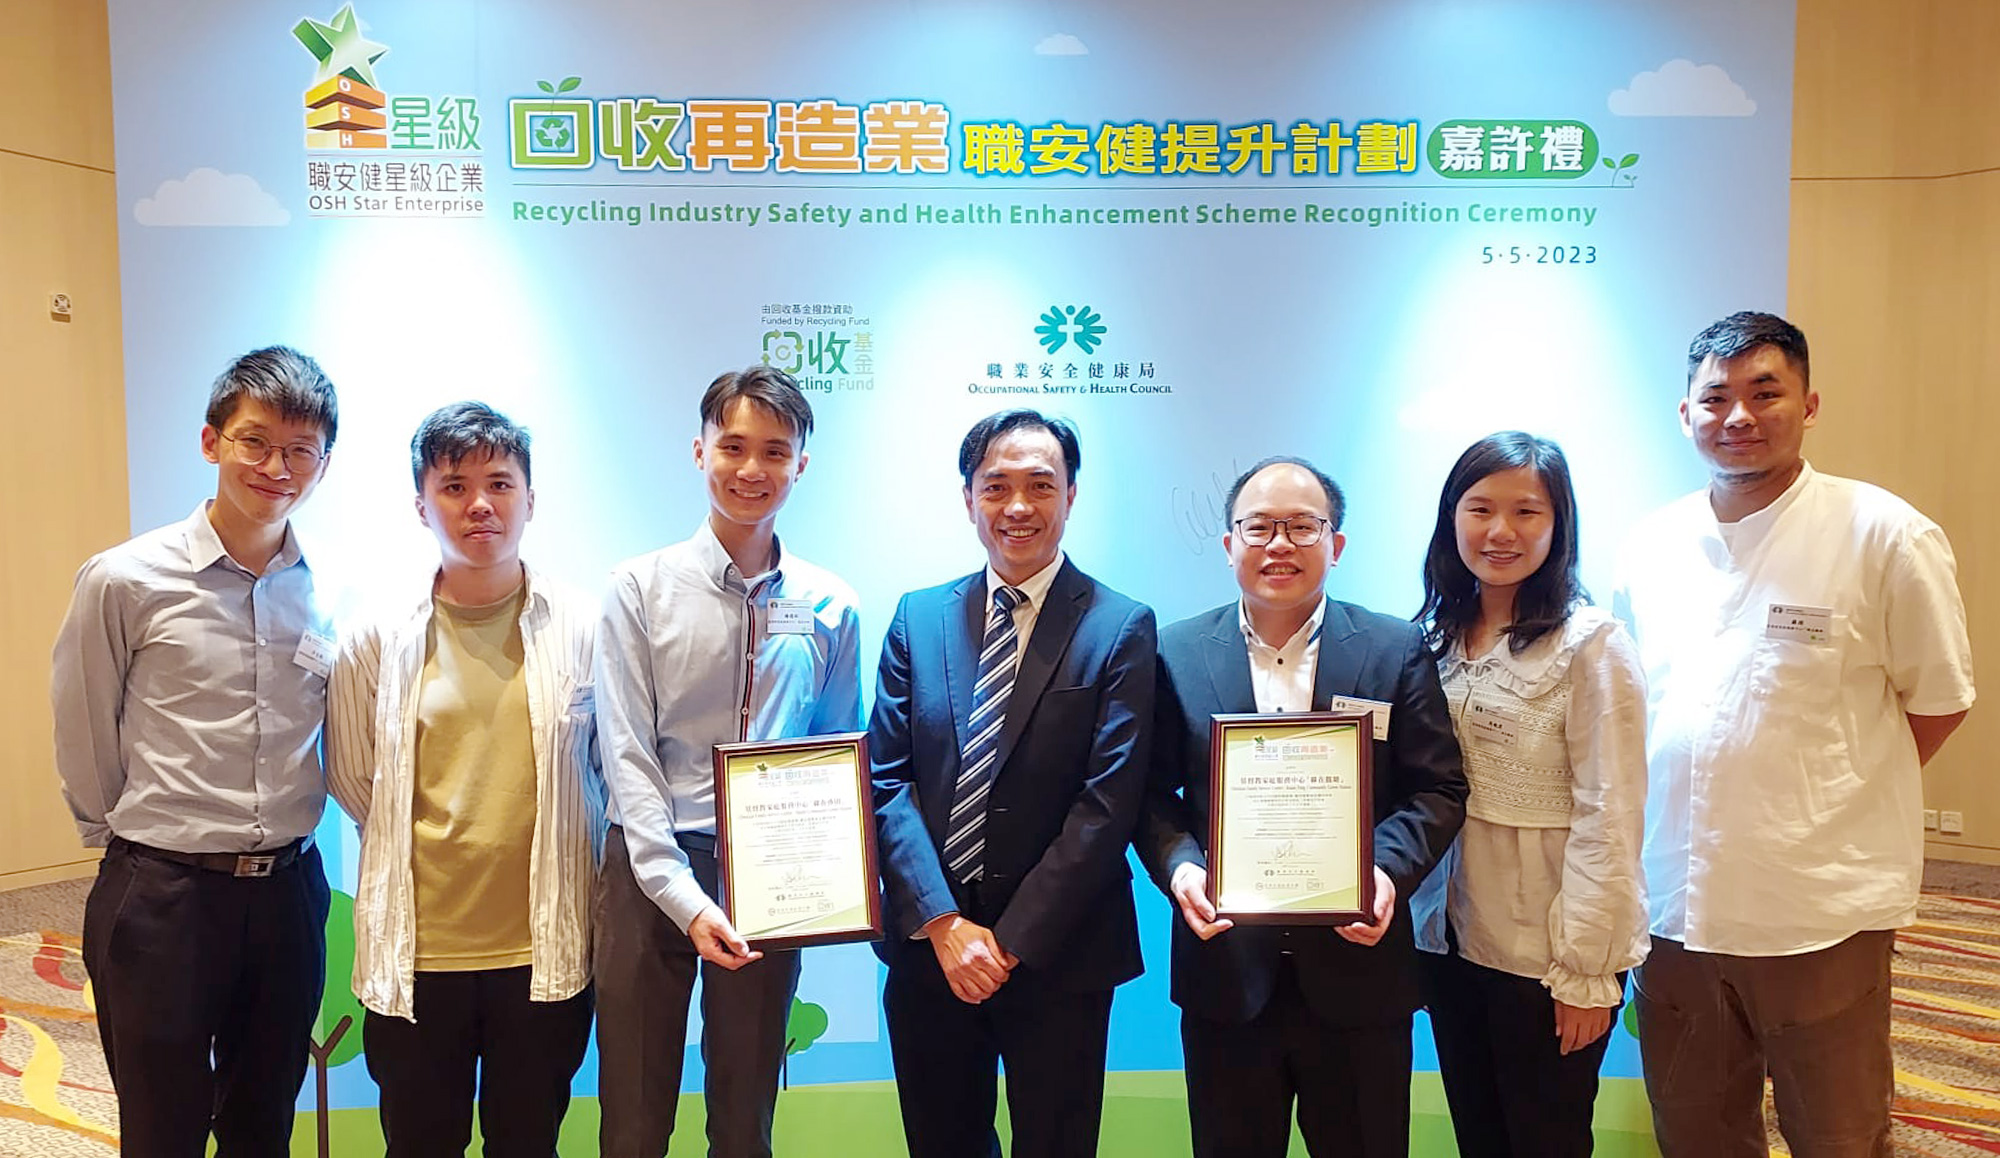 Occupational Safety & Health Council Award - Green @ Sha Tin and Green @ Kwun Tong 